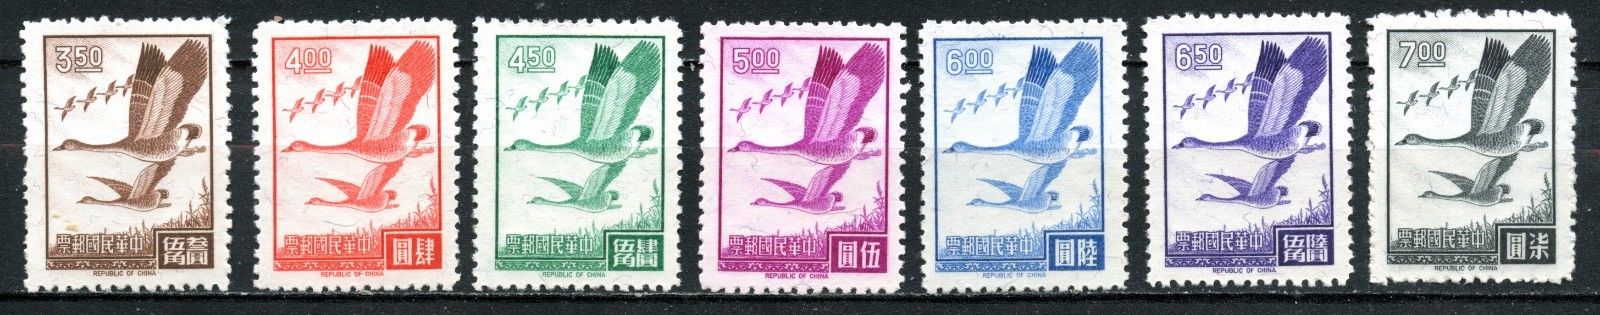 Taiwan 1966-67 Scott # 1496 - 1499 + 1501 - 1503, MNH, incomplete series